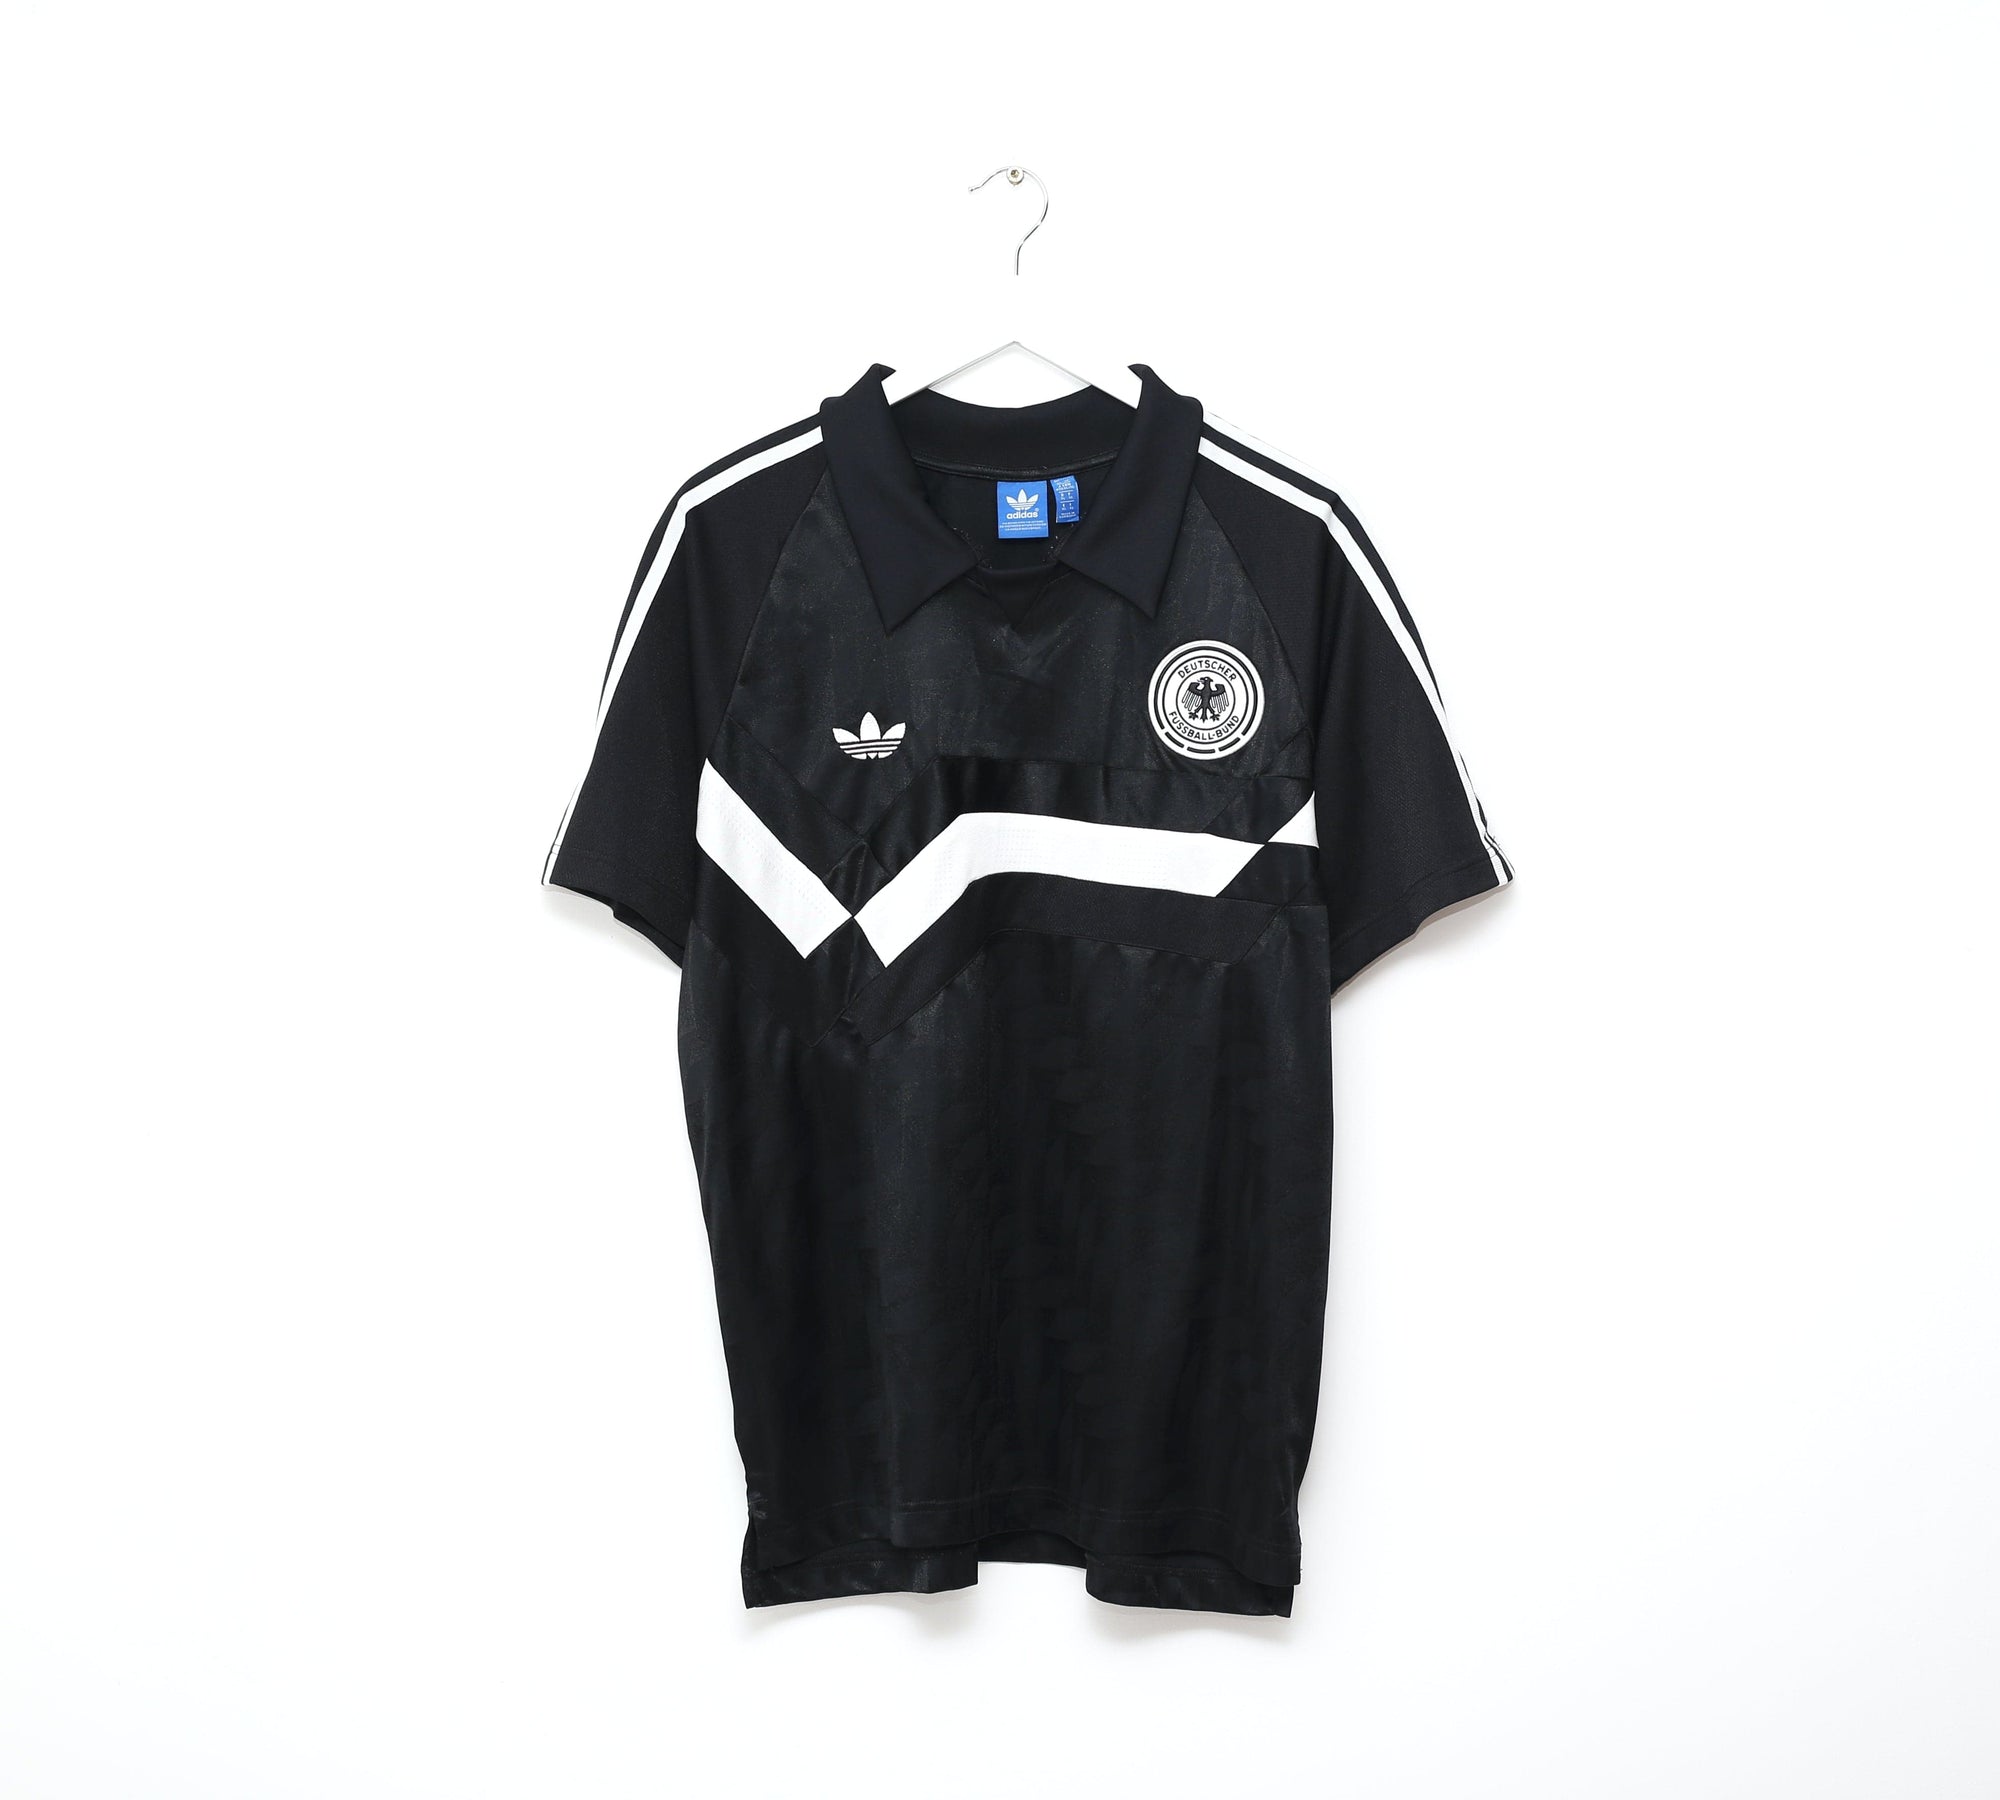 1988/91 WEST GERMANY Italia 90 Retro adidas Originals Football Shirt (L/XL)